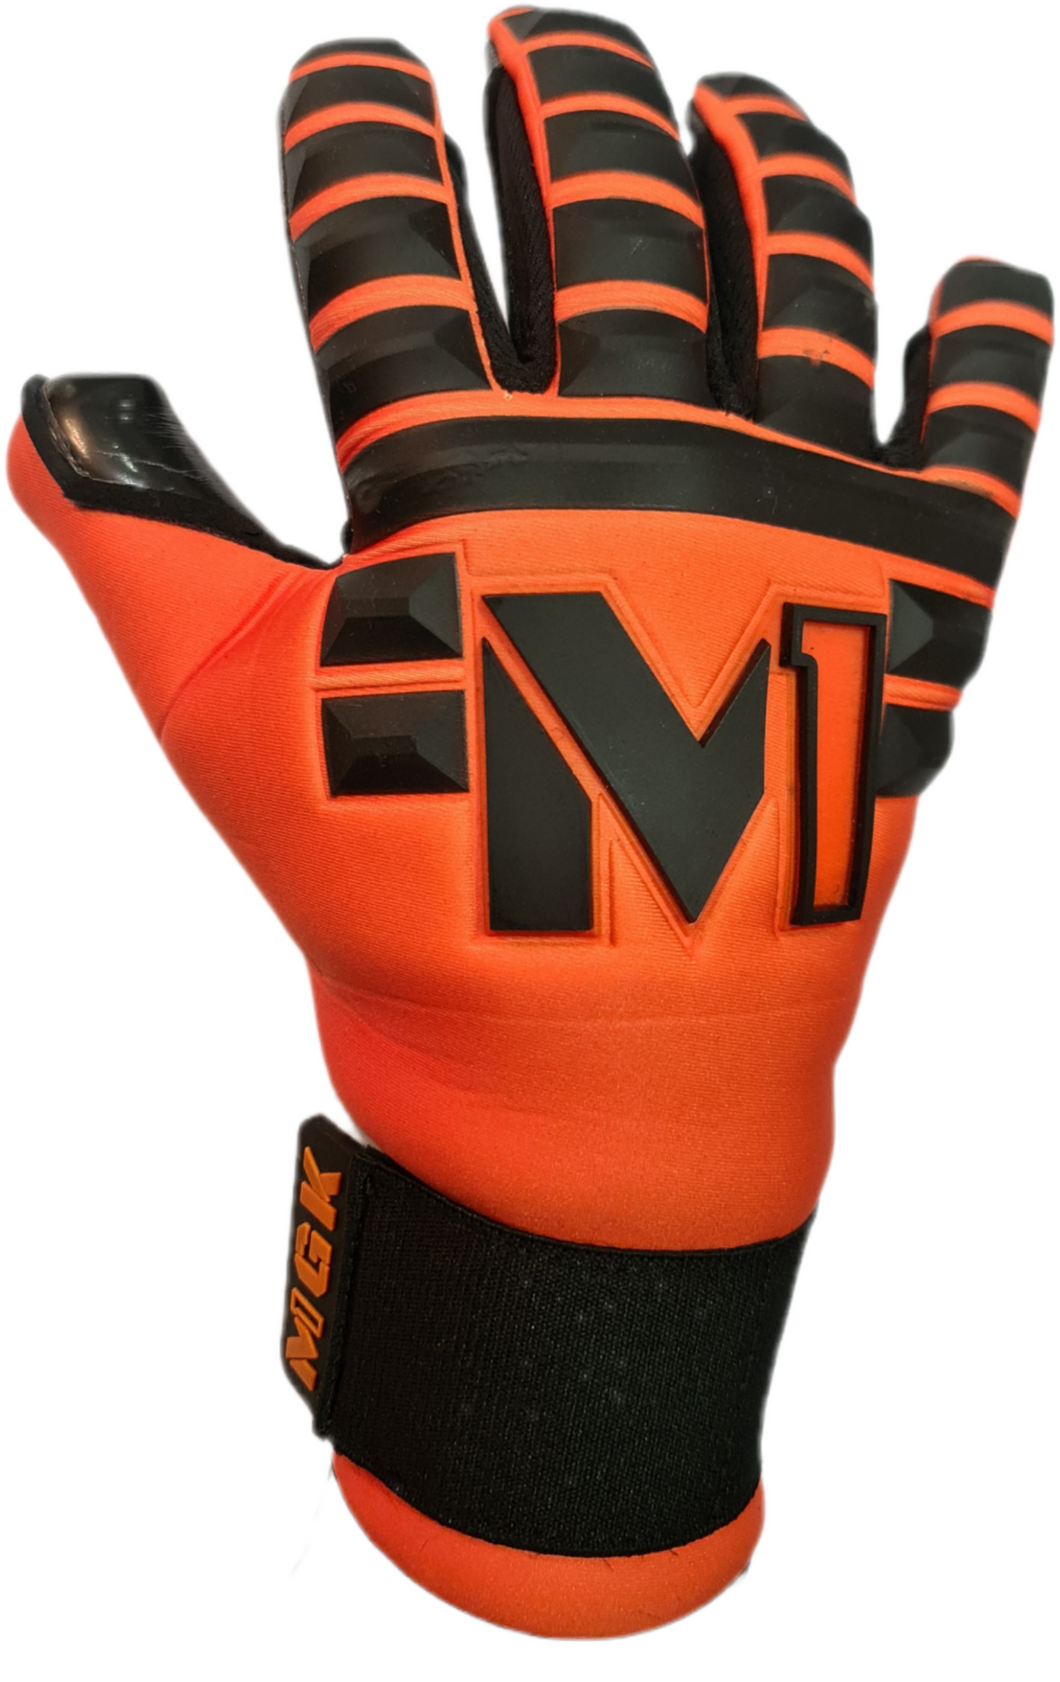 M1 Viper Orange/Black Goalkeeper Gloves